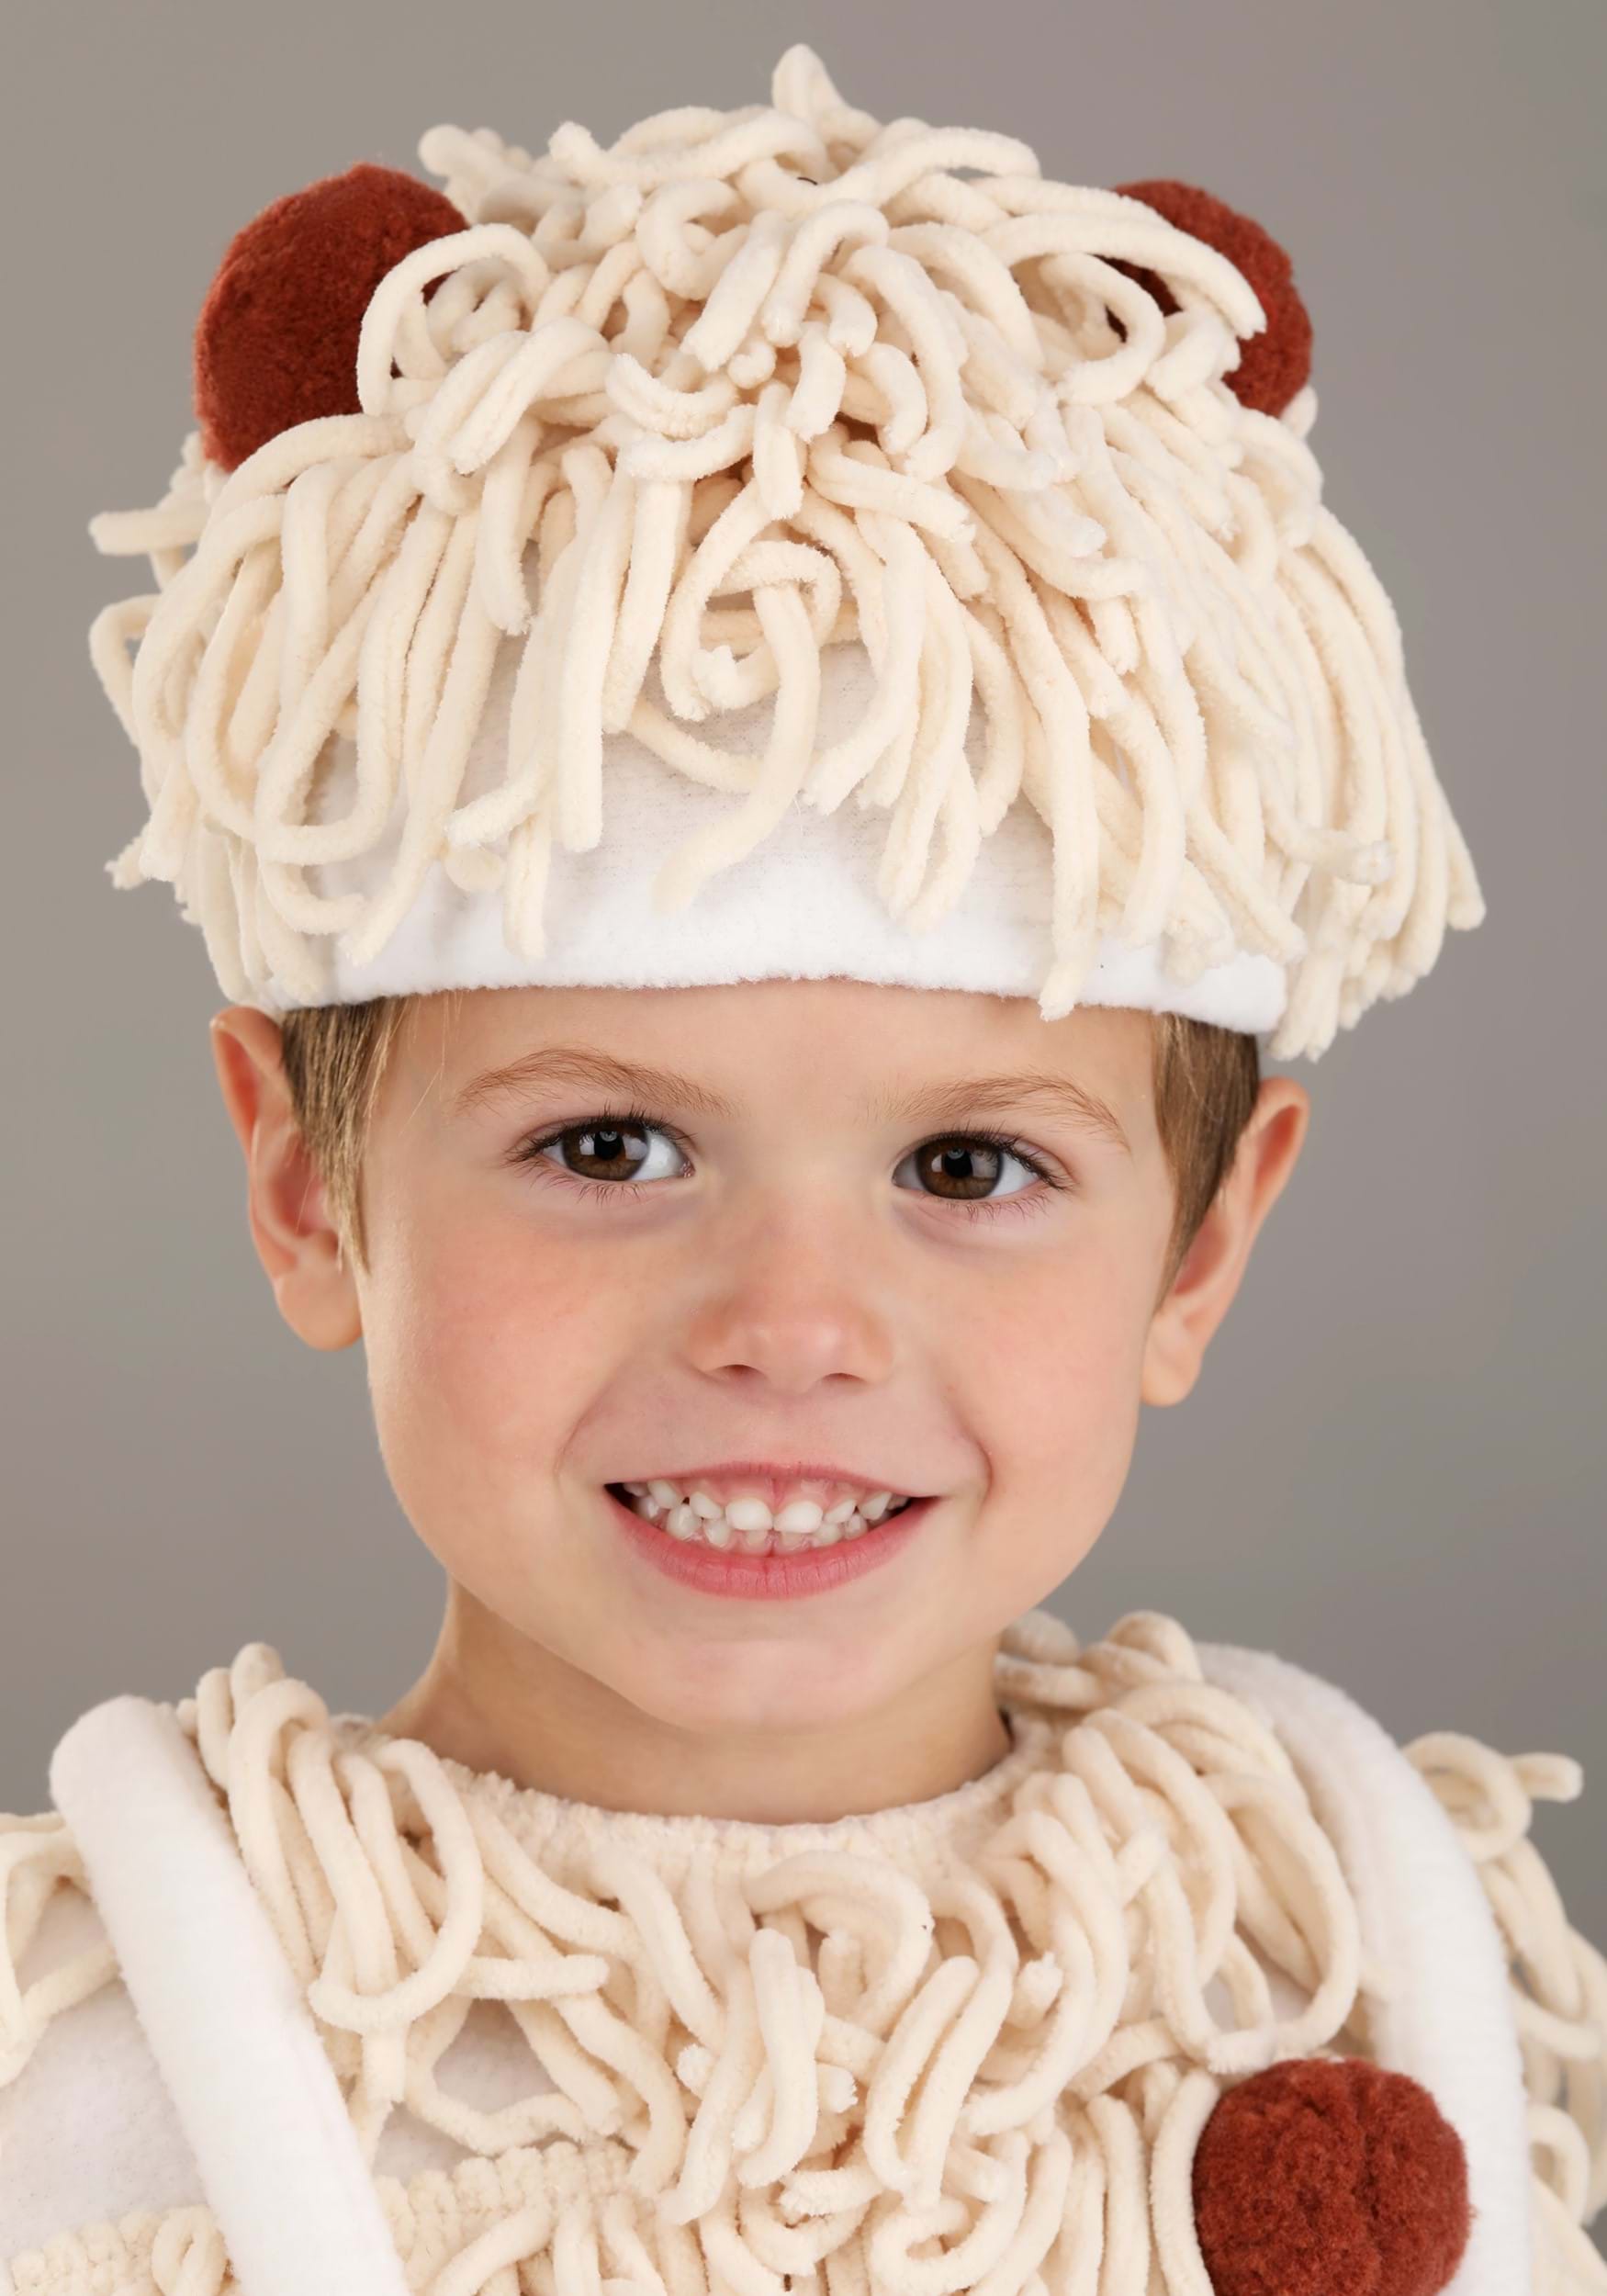 Spaghetti Toddler Costume